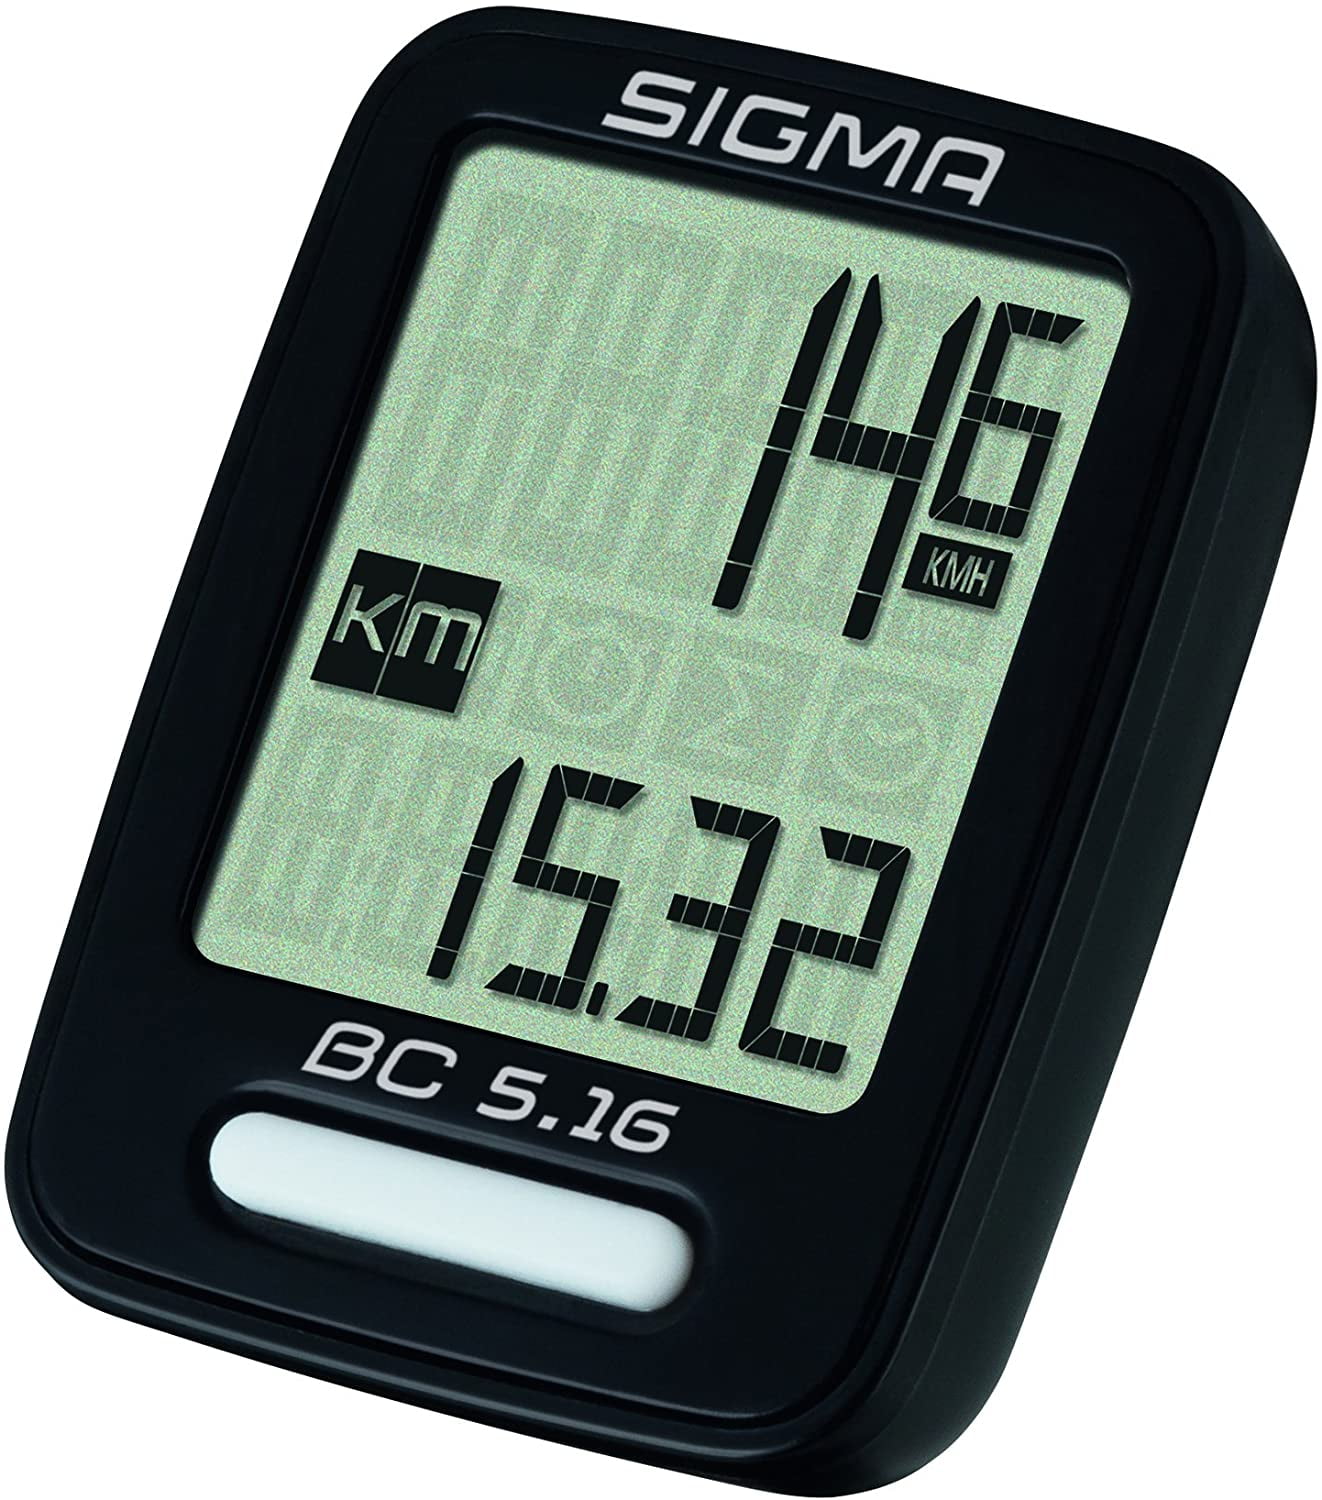 Sigma BC 5.16 Bike Computer Wired Black Speed Distance Ride Time Weatherproof 